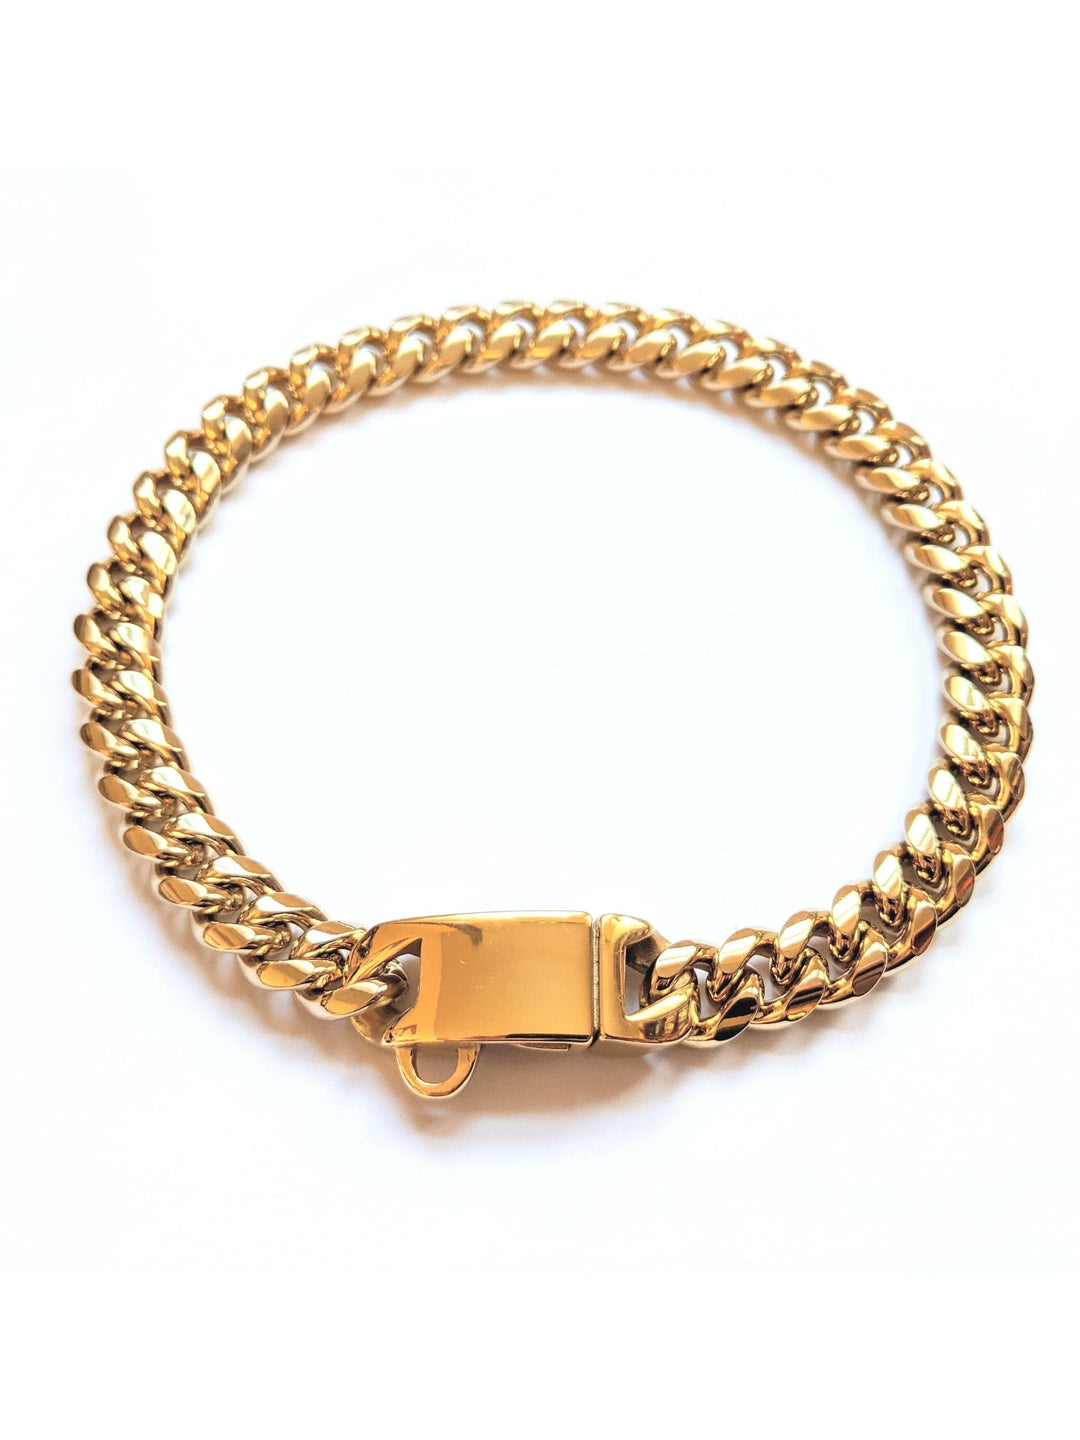 Jax & Molly's Gold Cuban Link Dog Chain - 12mm/16"